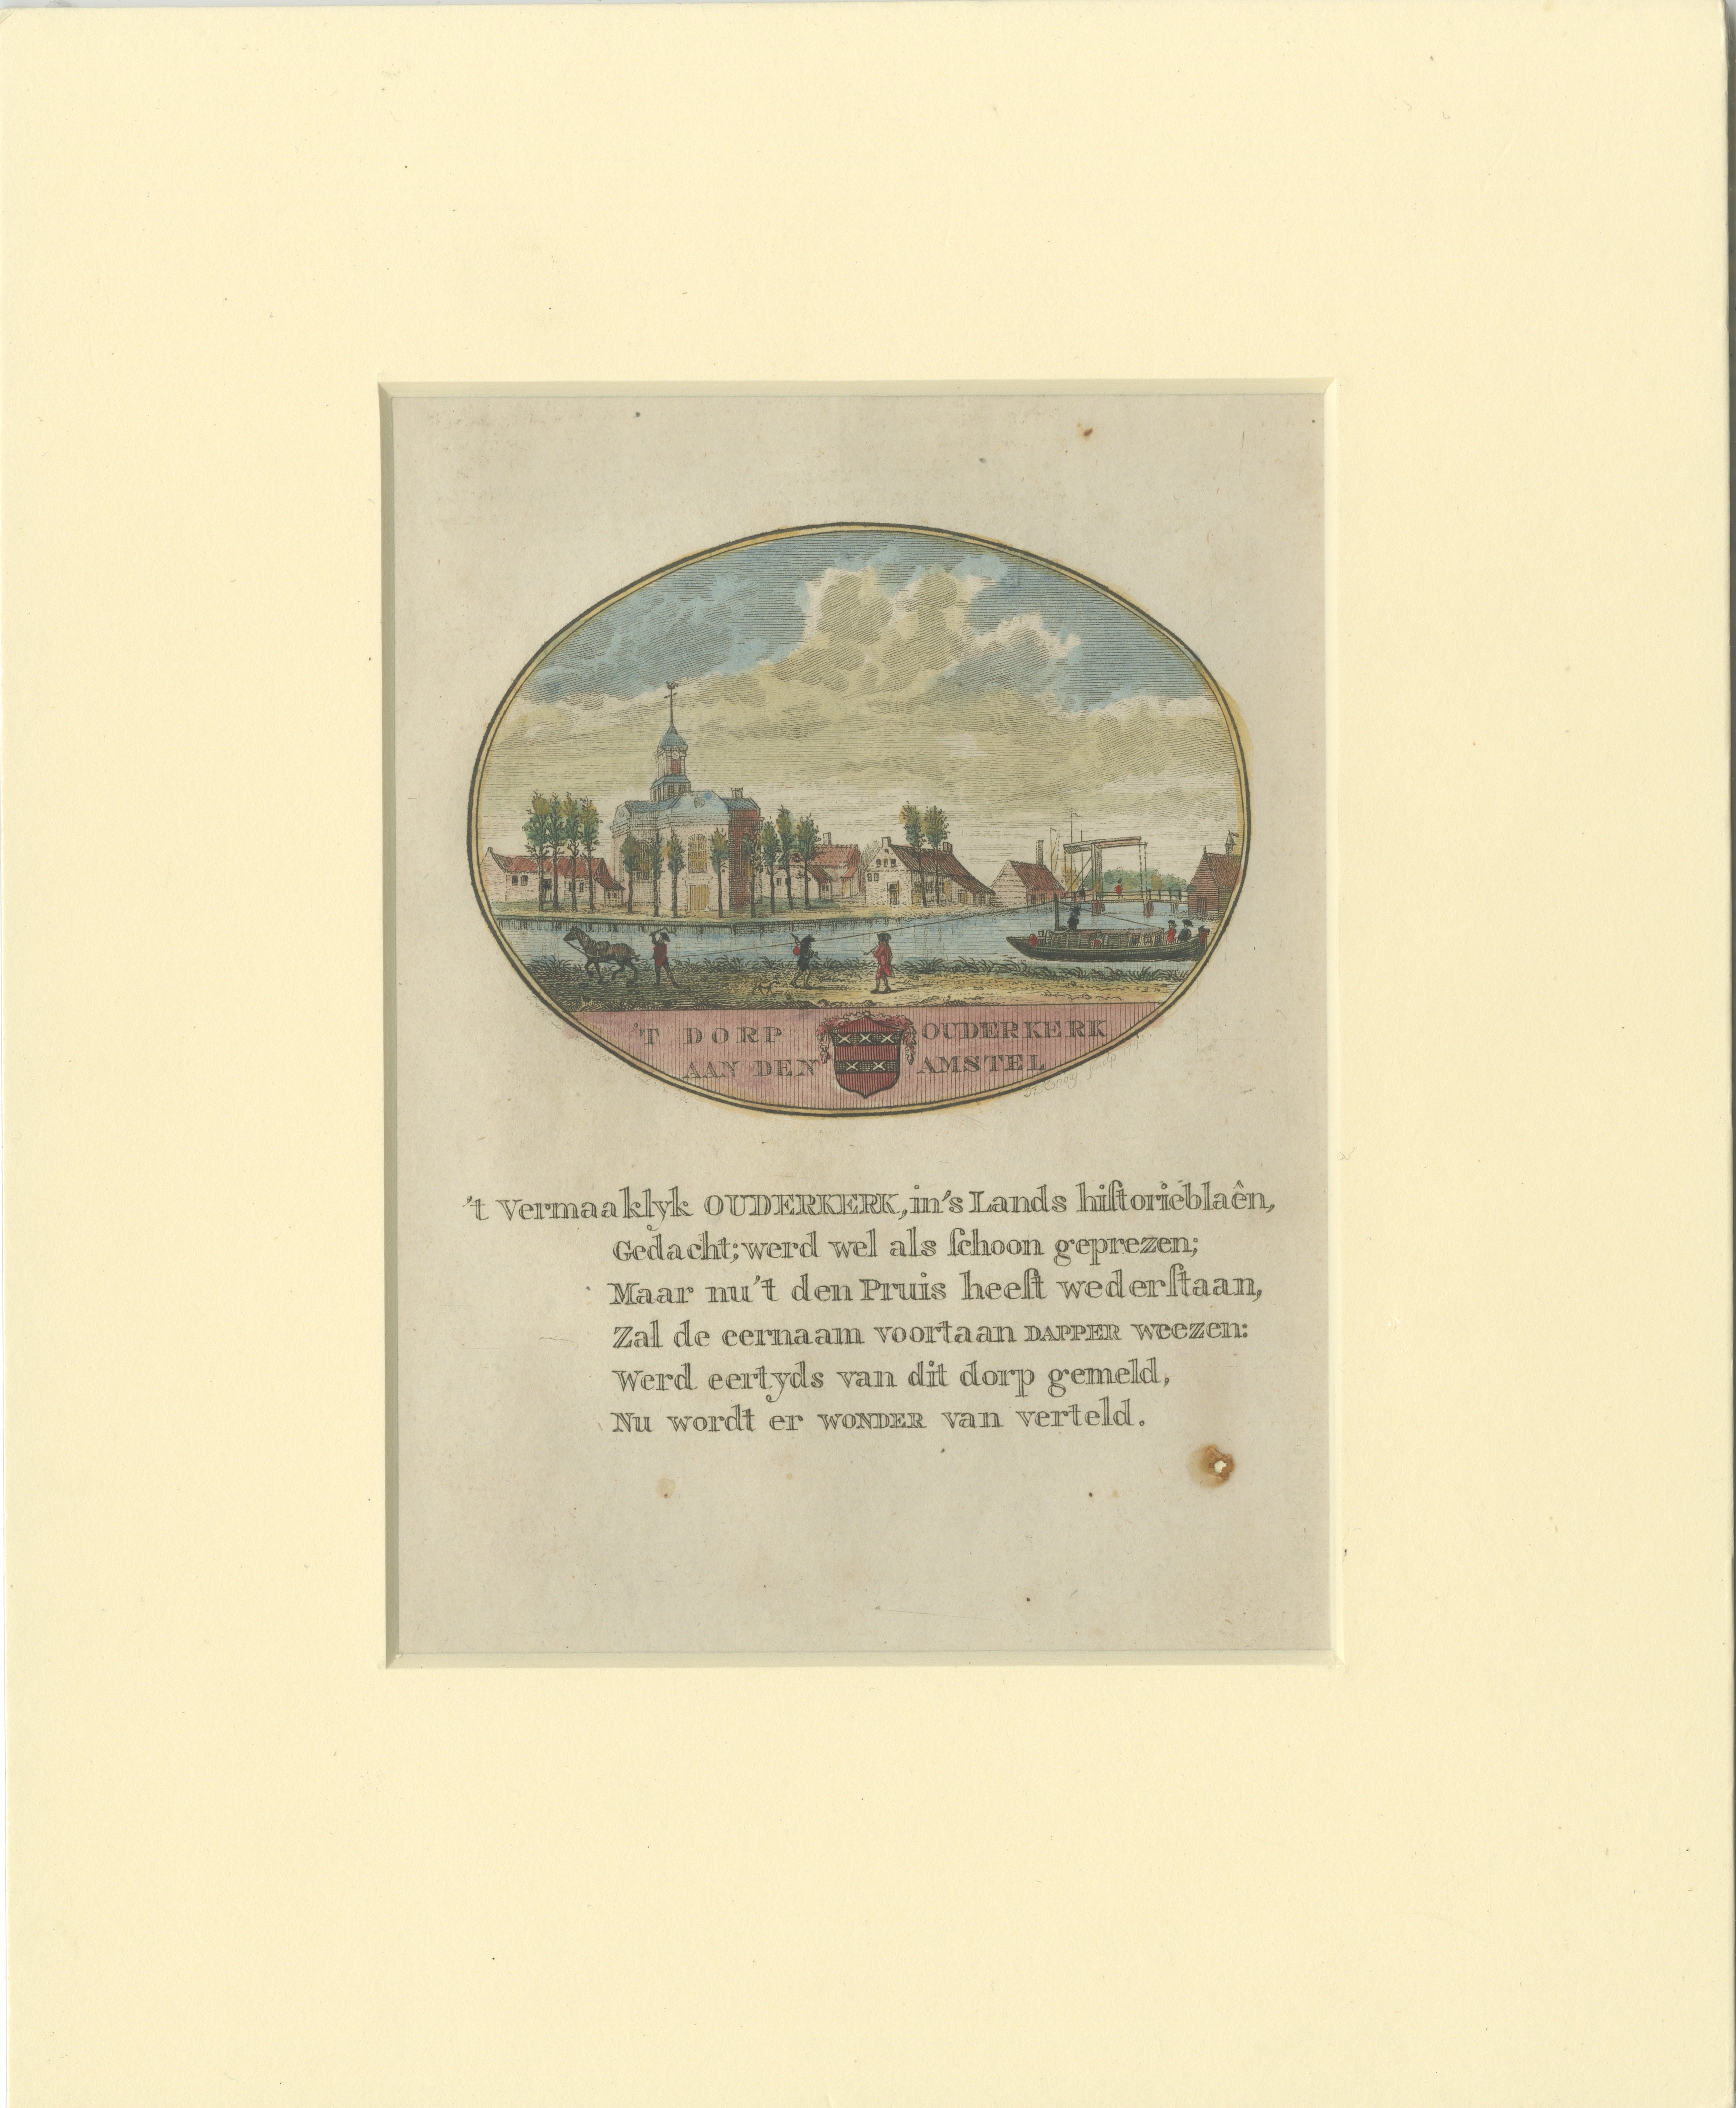 Impression ancienne de la ville d'Audenkerk aan de Amstel, Hollande, 1795 en vente